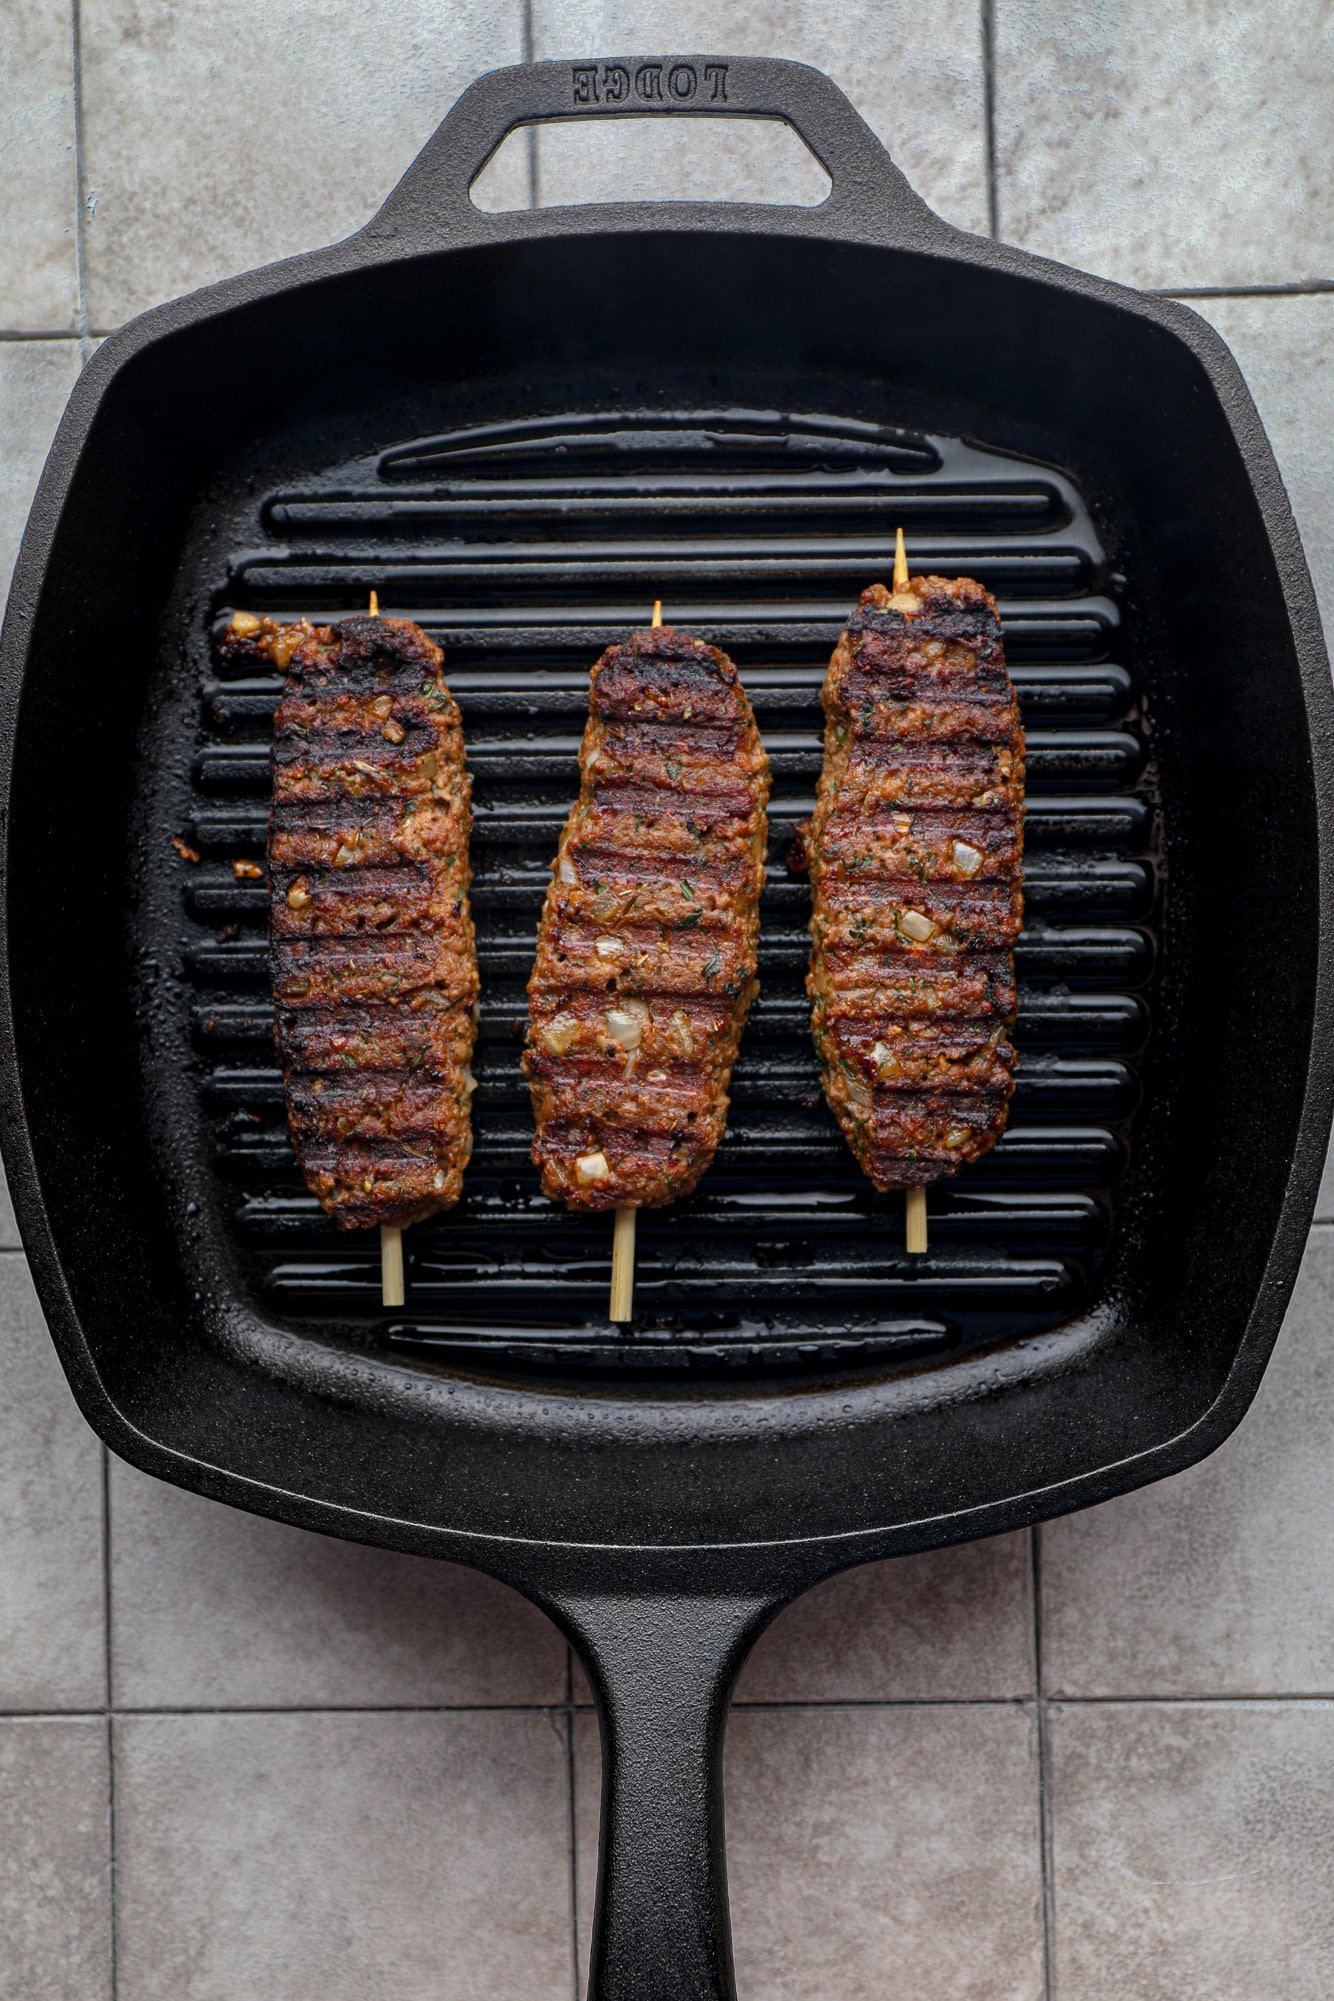 grilling 3 vegan kofta kebabs on a black grill pan.